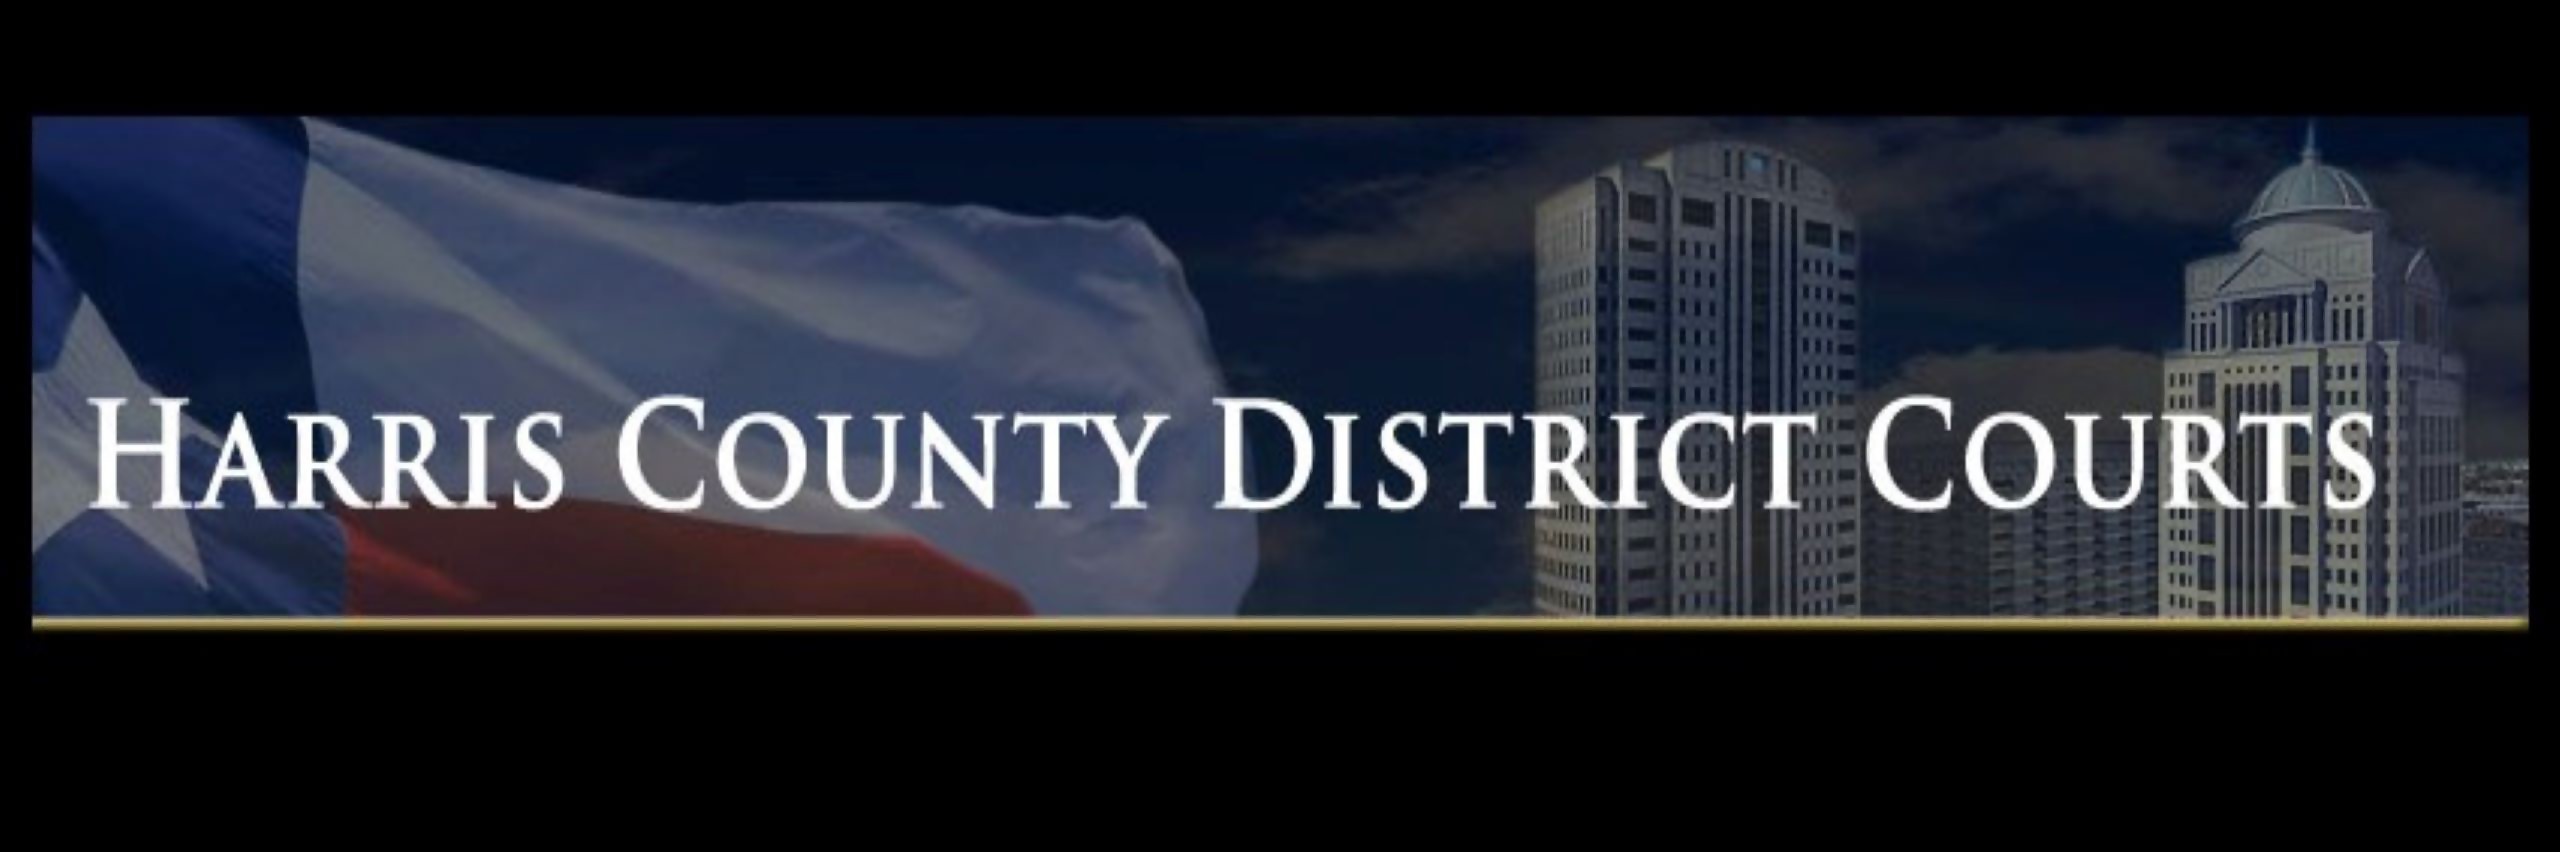 313th District Court - Live Stream